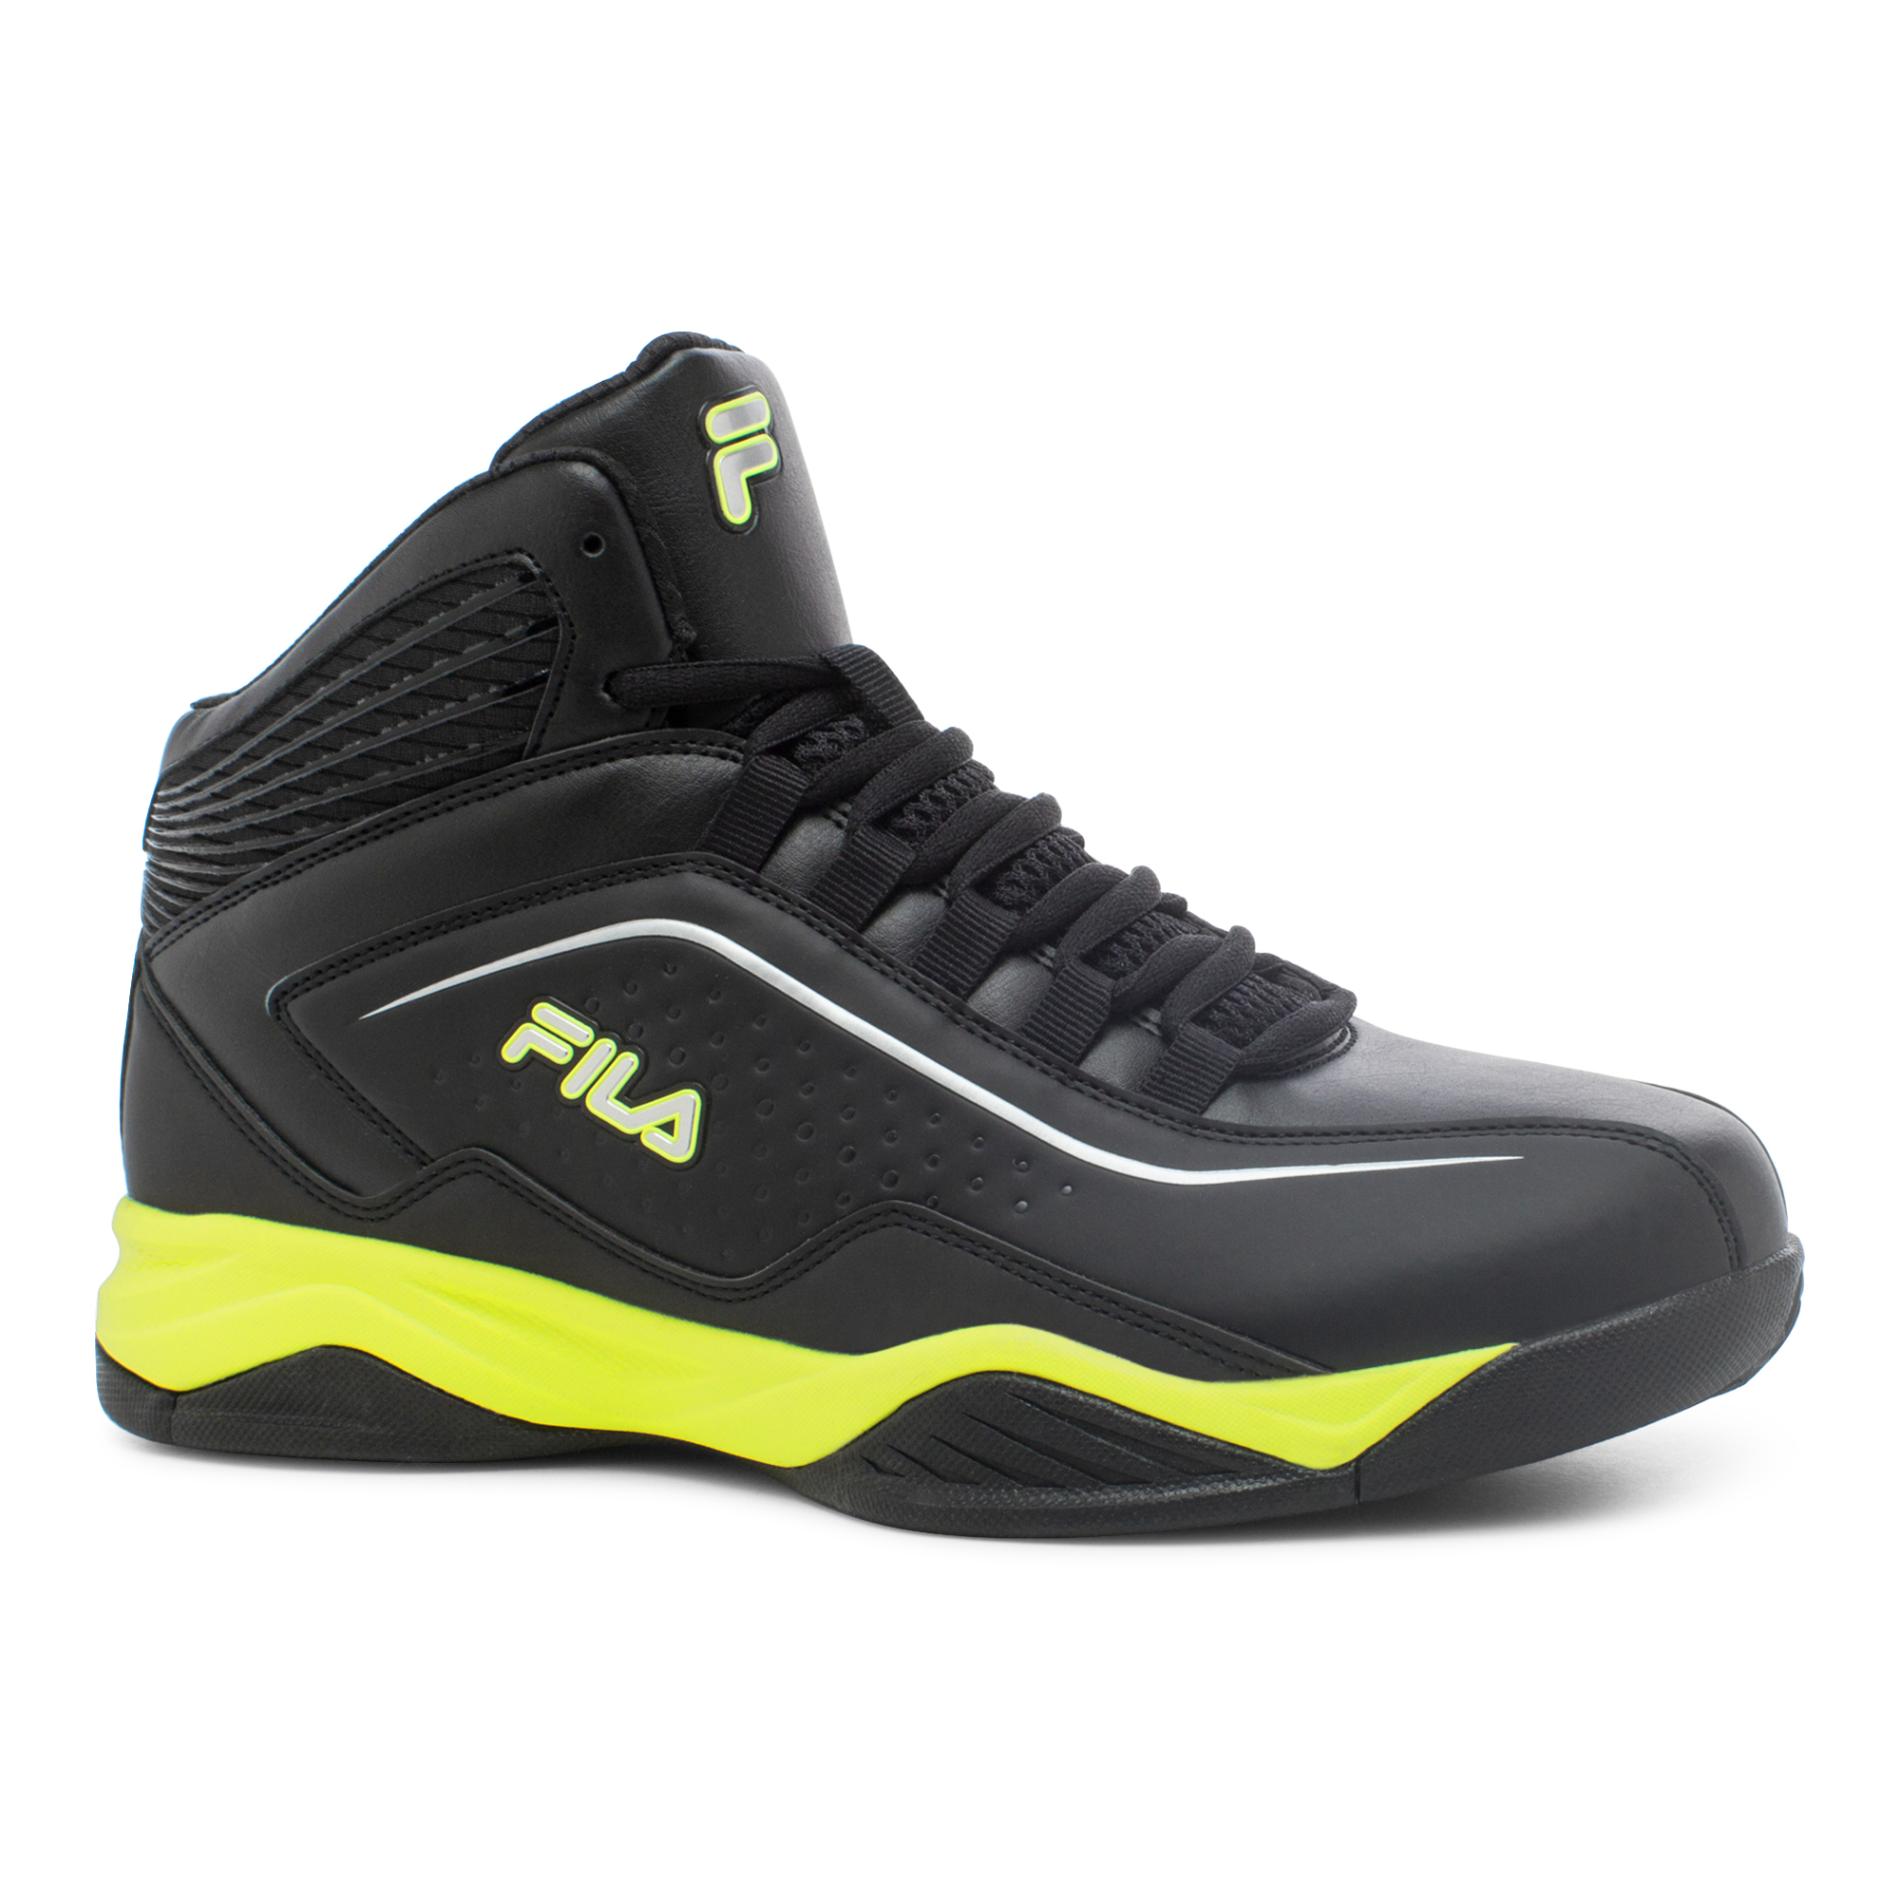 Fila Men's Entrapment Basketball Shoe - Black/Yellow